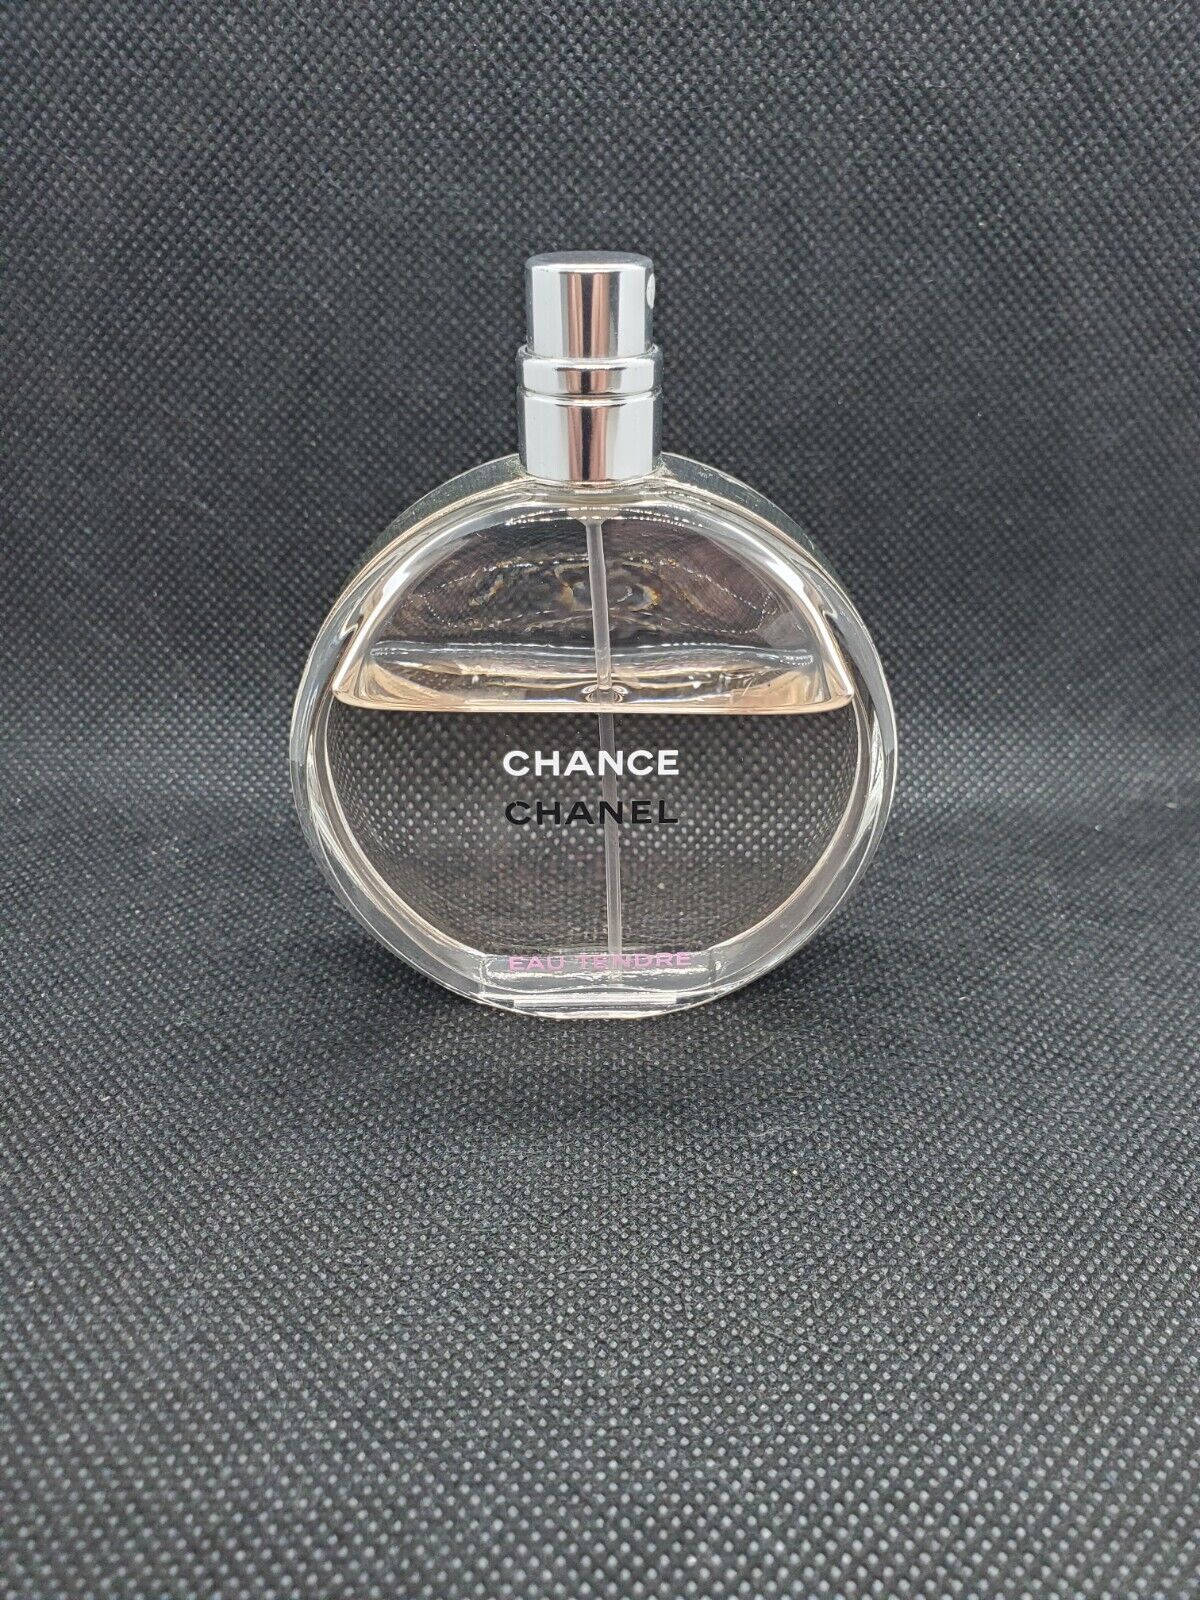 Chanel Chance Eau Tendre Eau De Toilette Spray France 1.7 fl oz/50 ml  65%+ Full